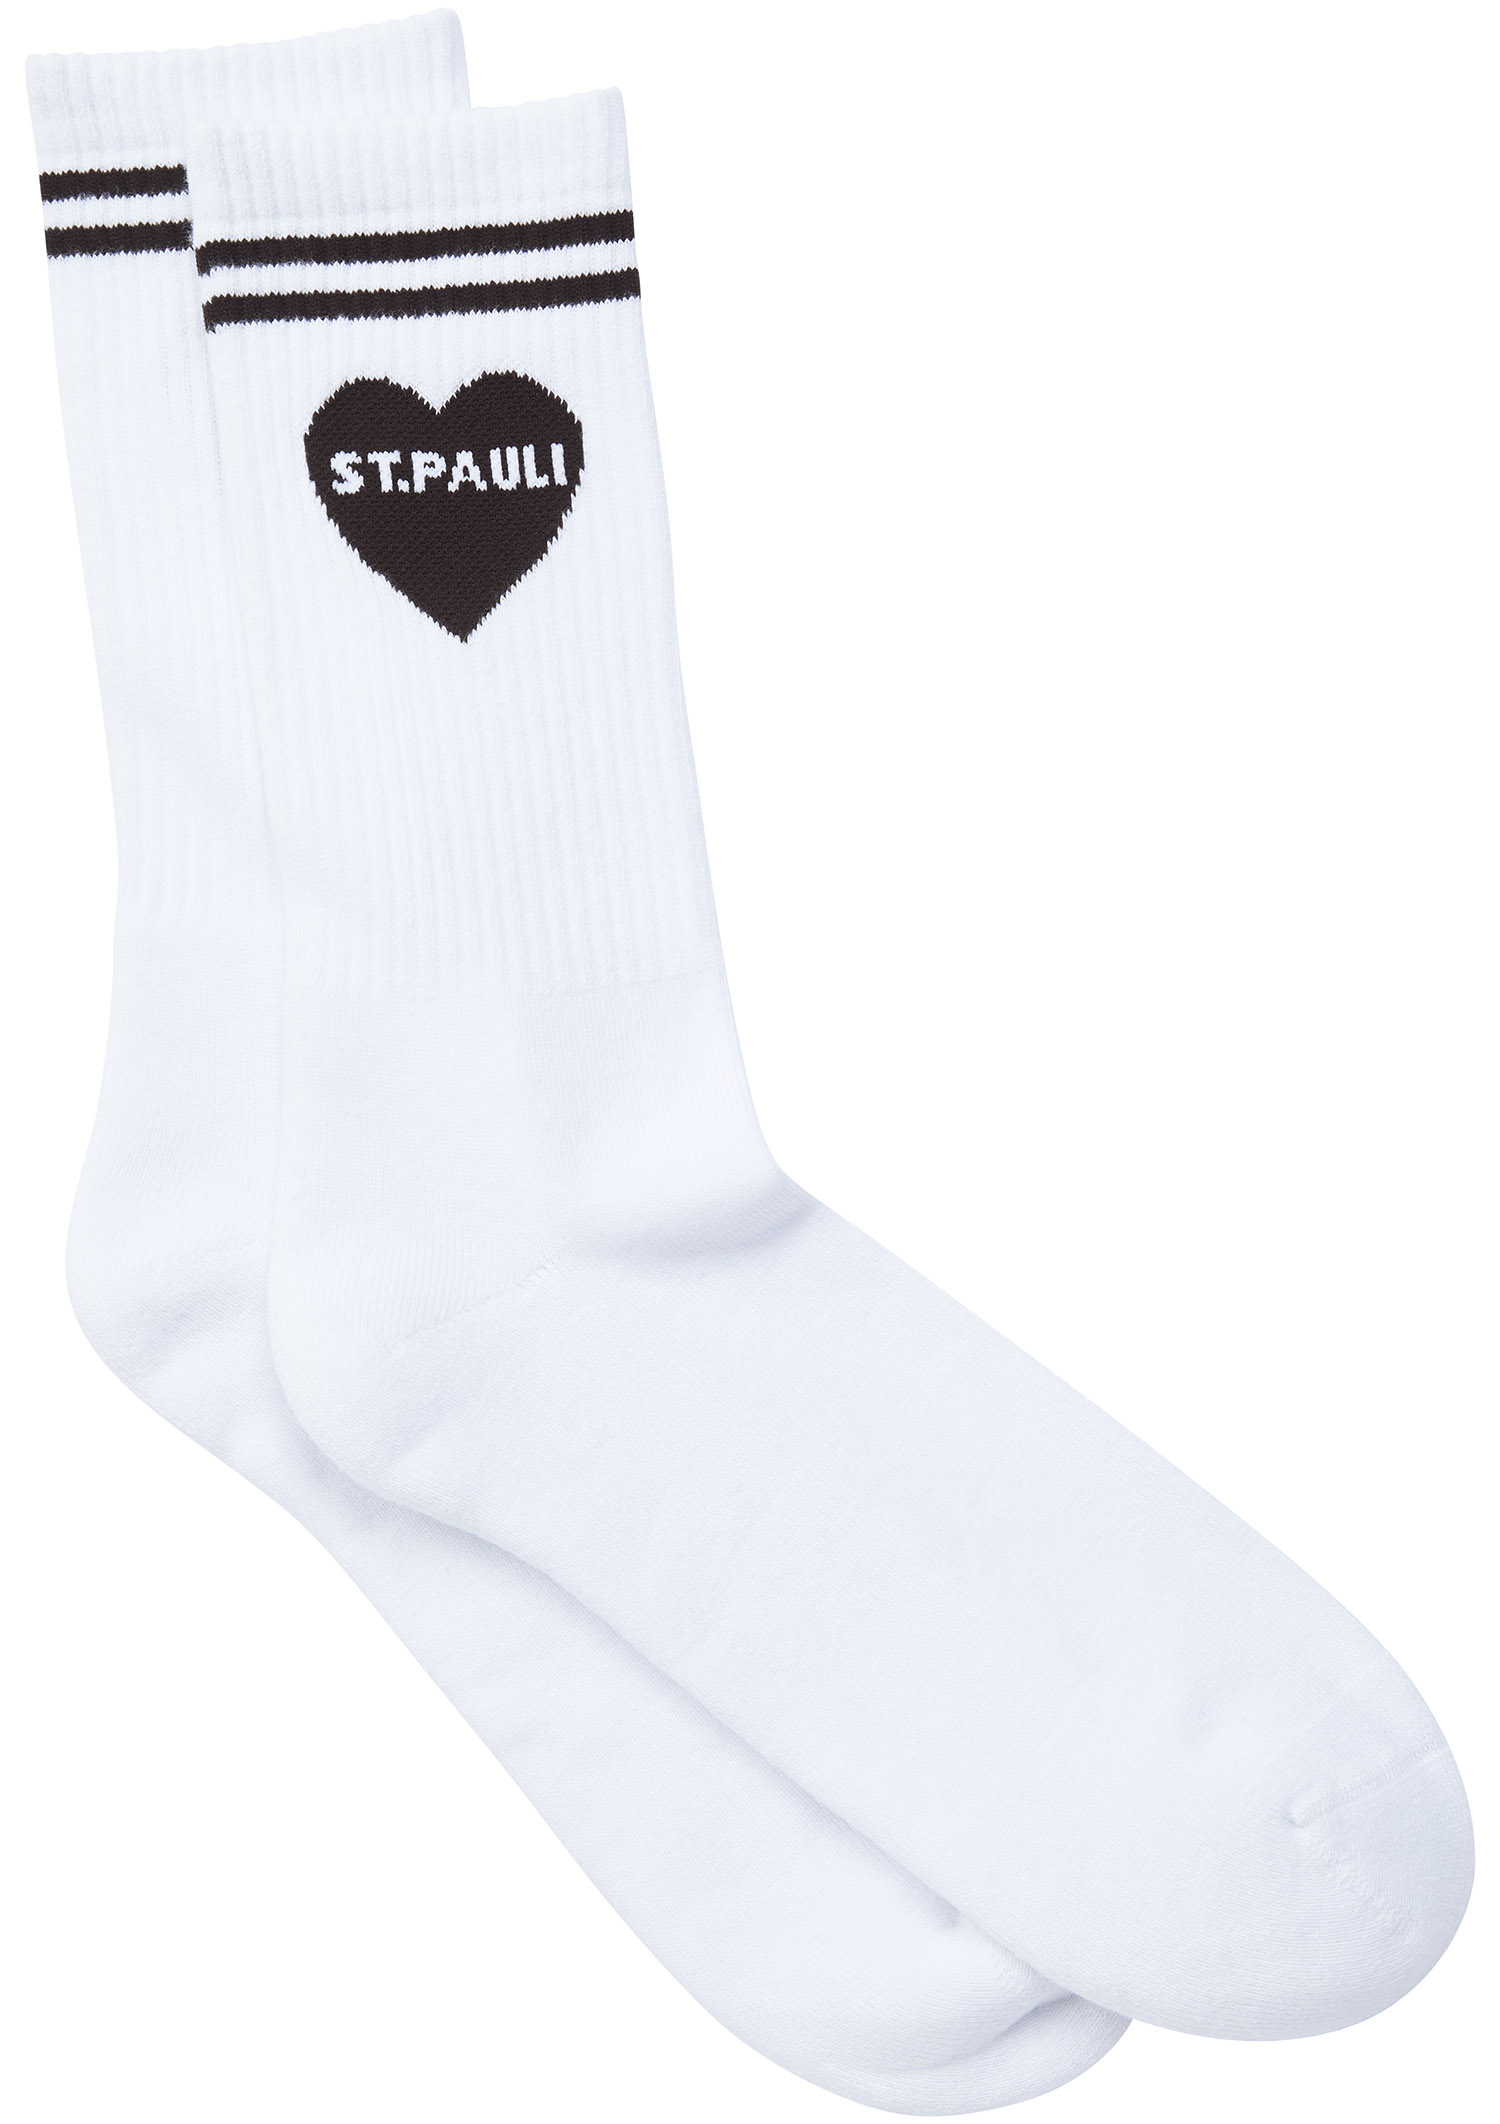 Socken "St. Pauli Herz" - schwarz